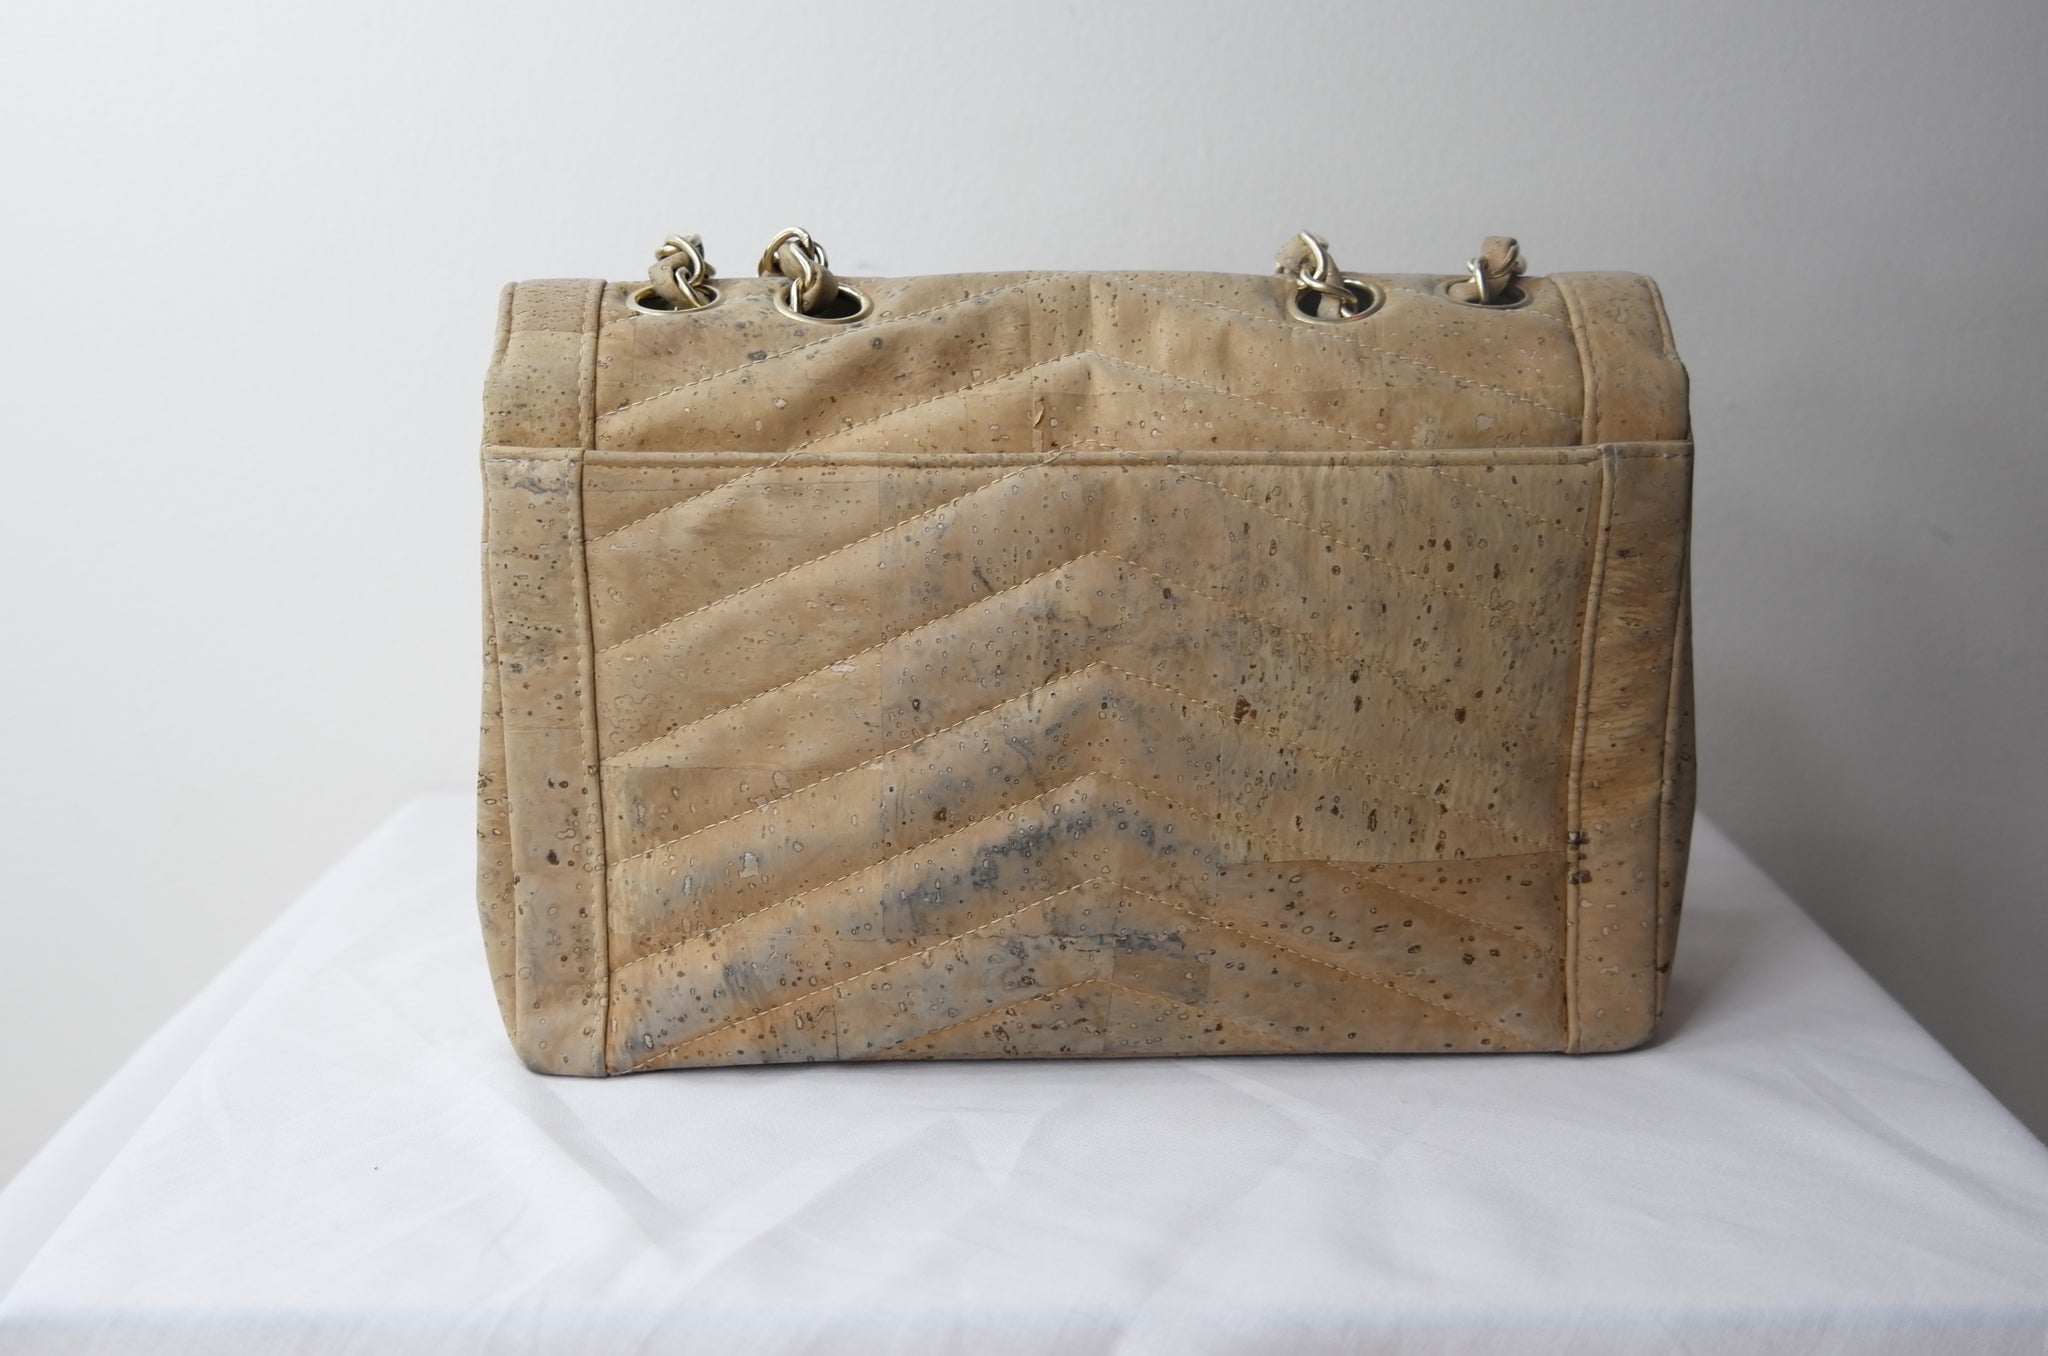 Authentic preowned vintage rare designer bags